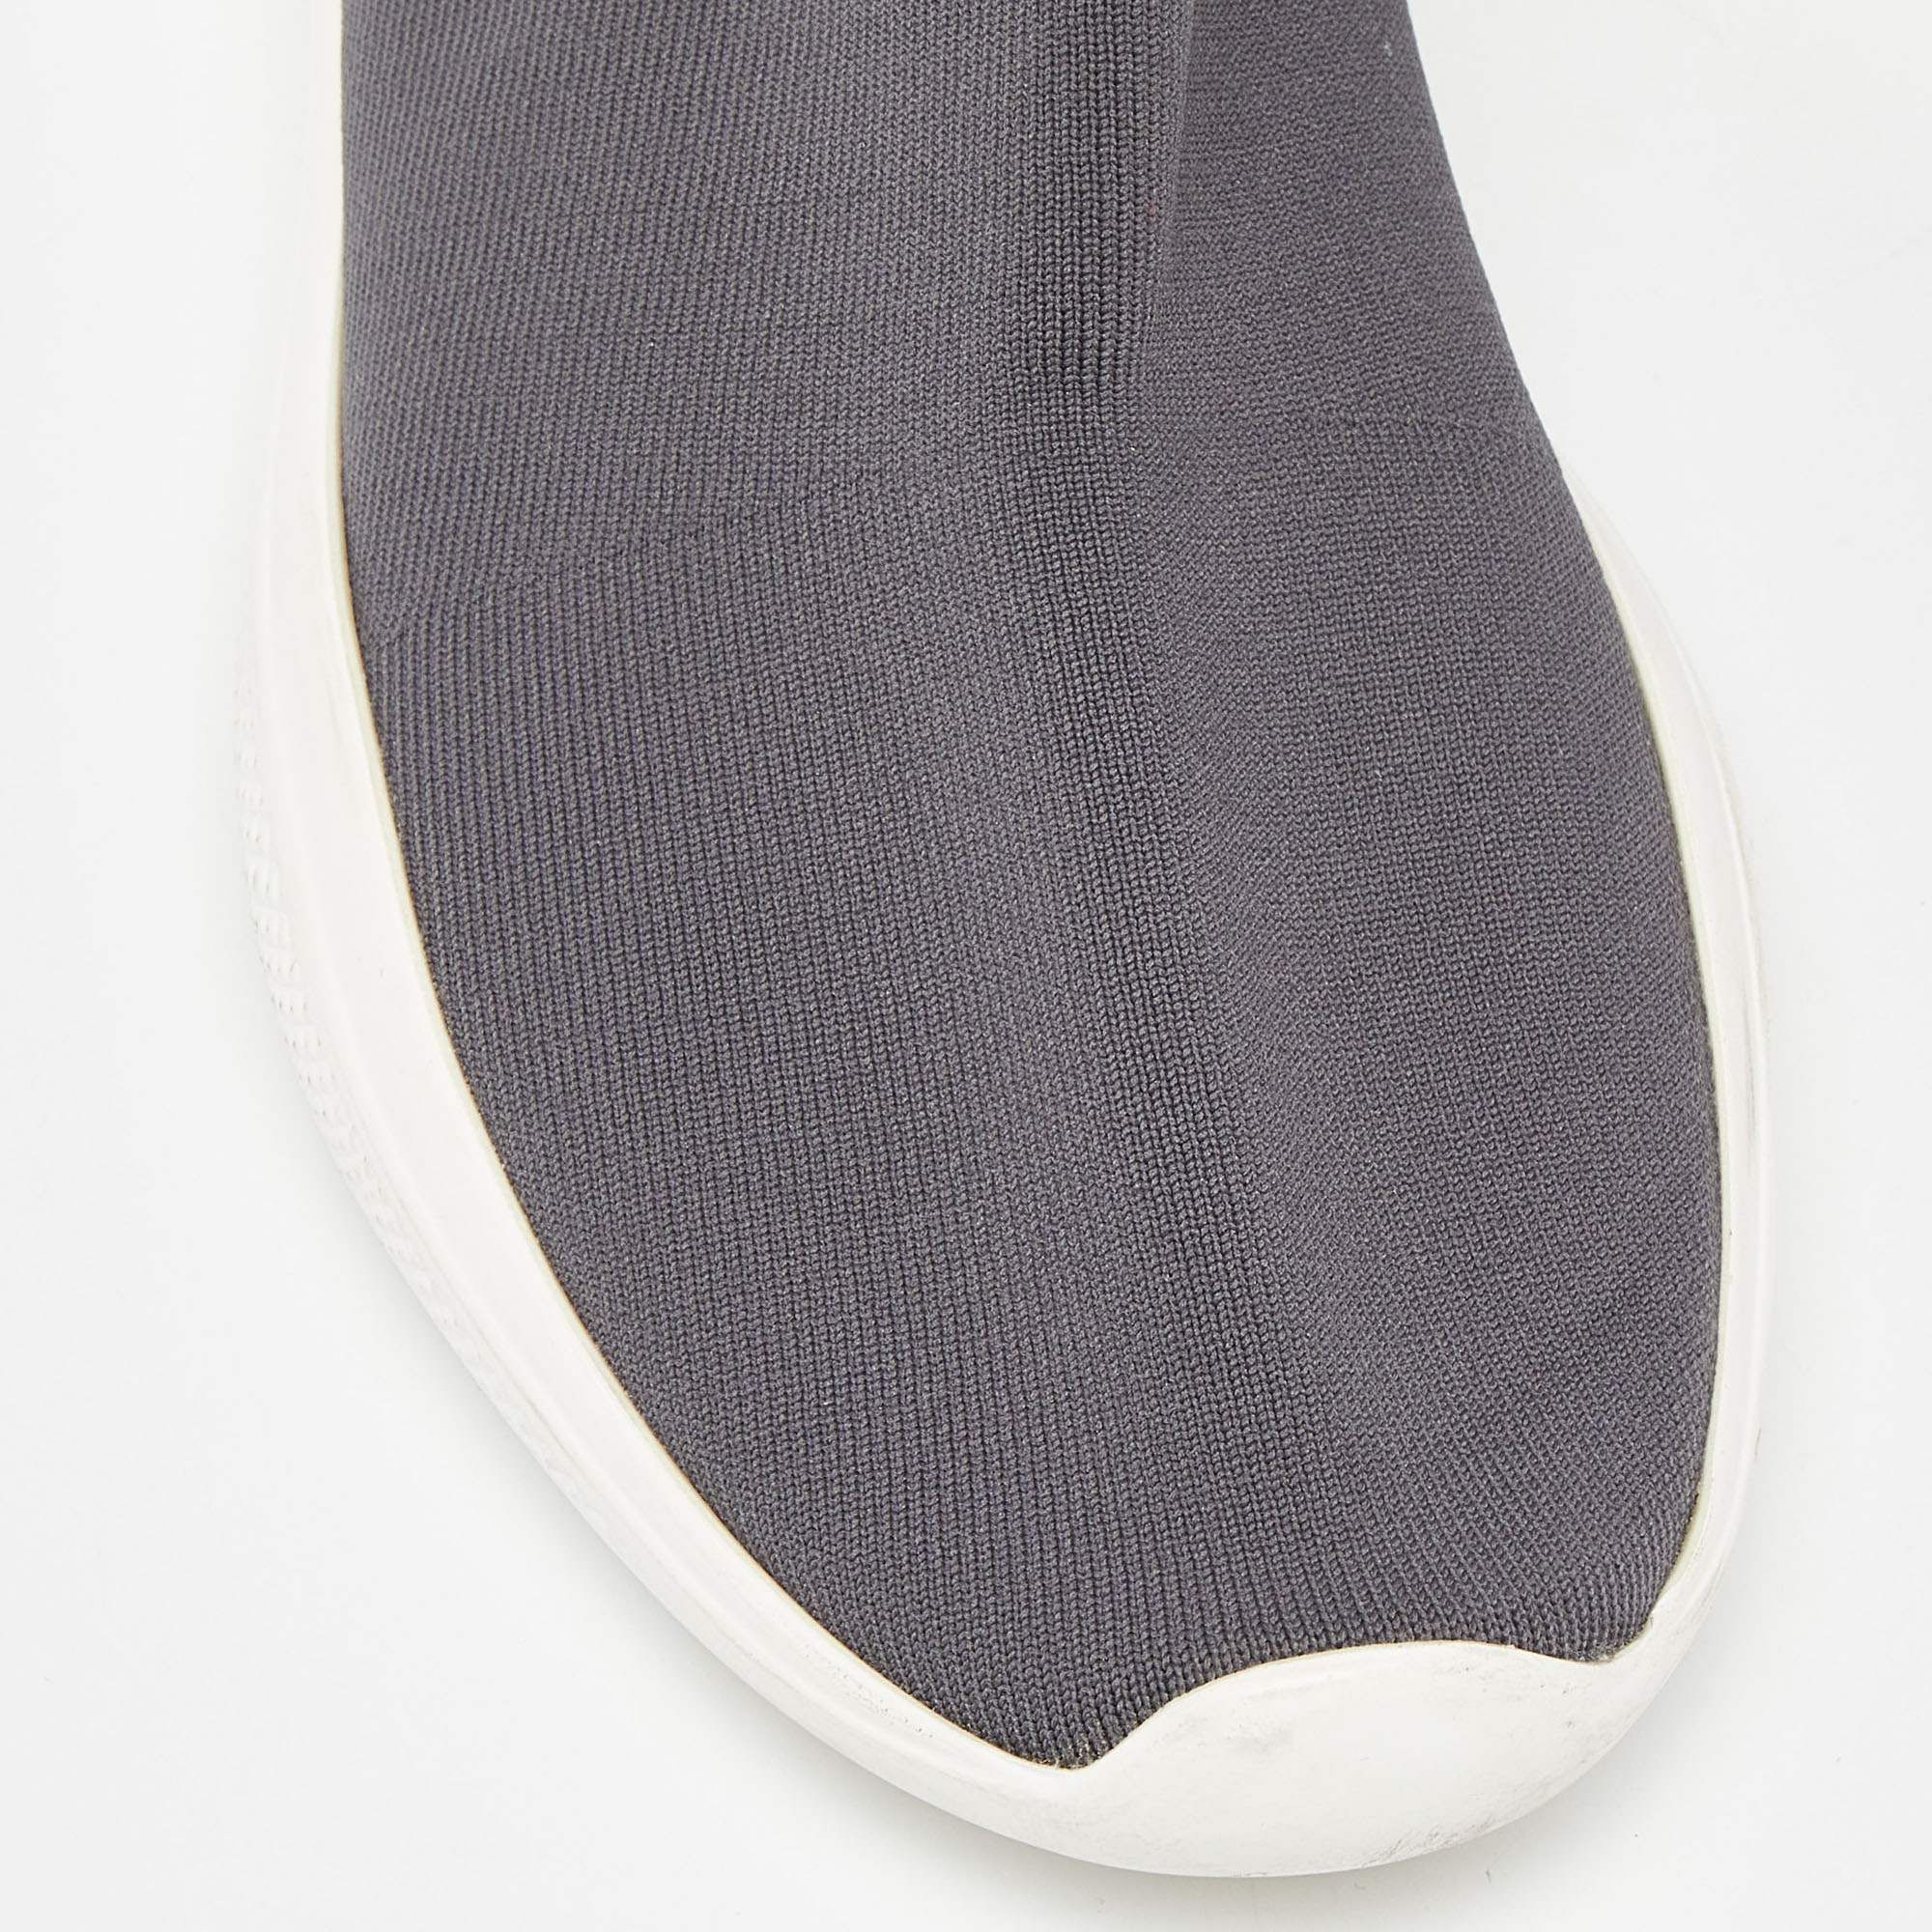 Prada Sport Grey Knit Fabric High Top Sneakers Size 39